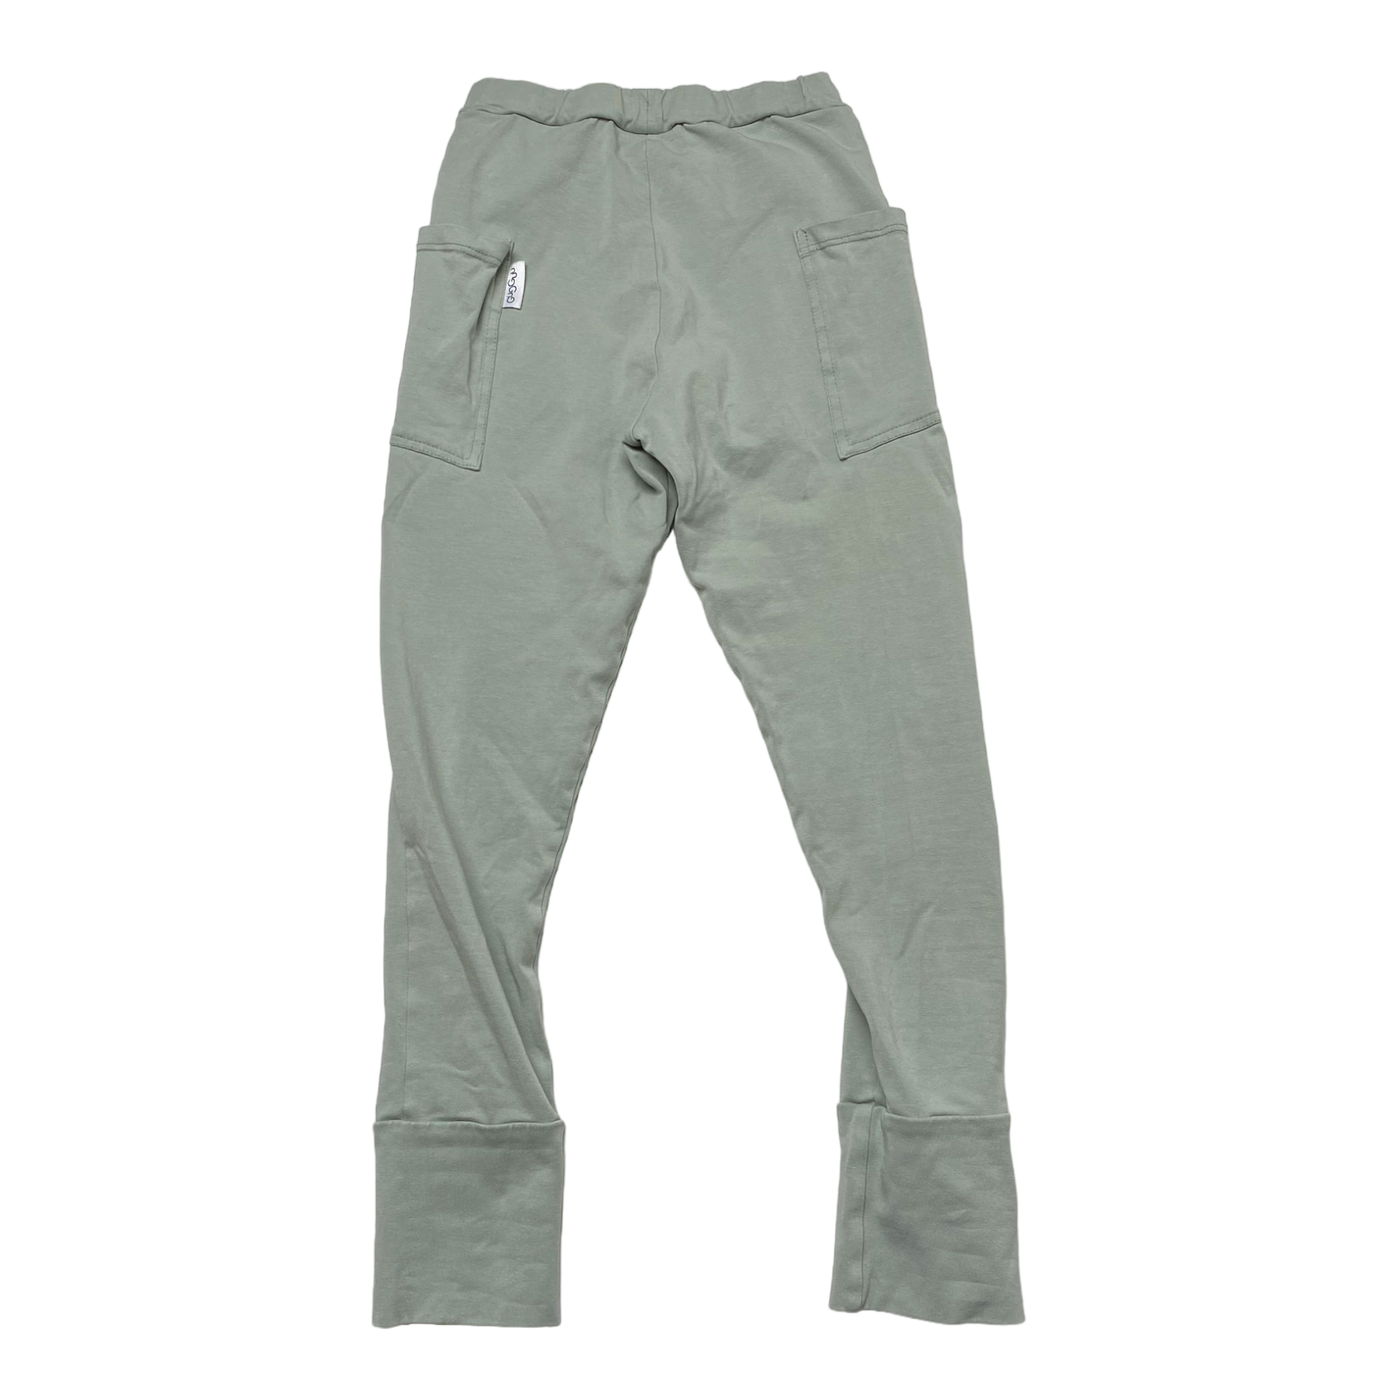 Gugguu pockets leggings, turquoise | 122cm